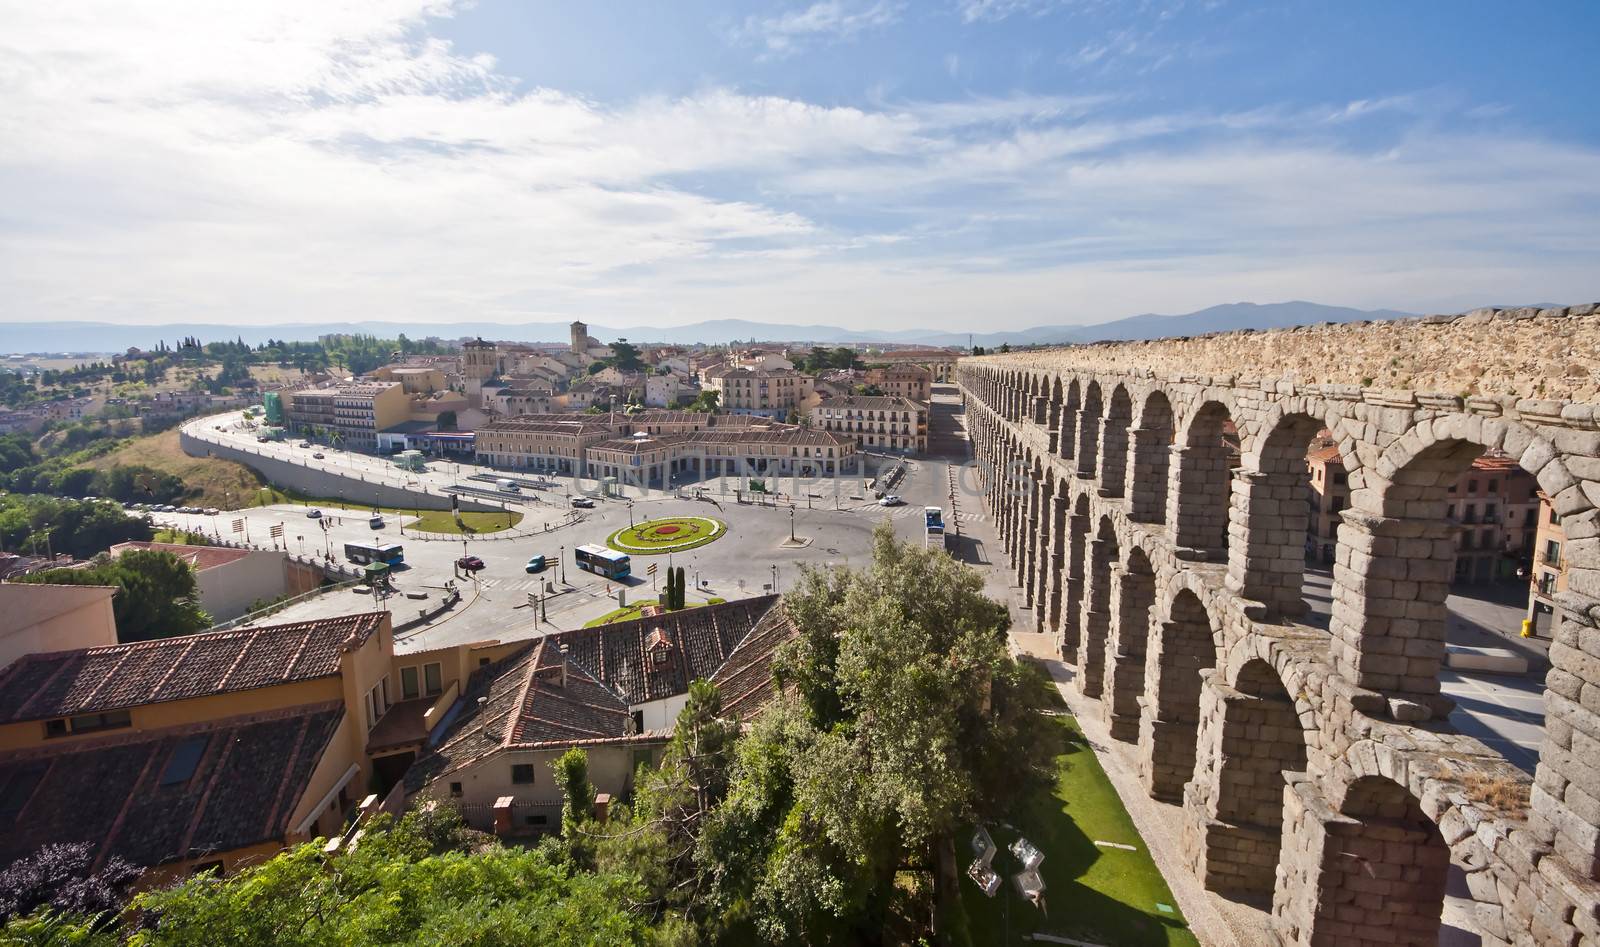 Segovia Aqueduct Castlla located in Leon Spain at dawn with city views